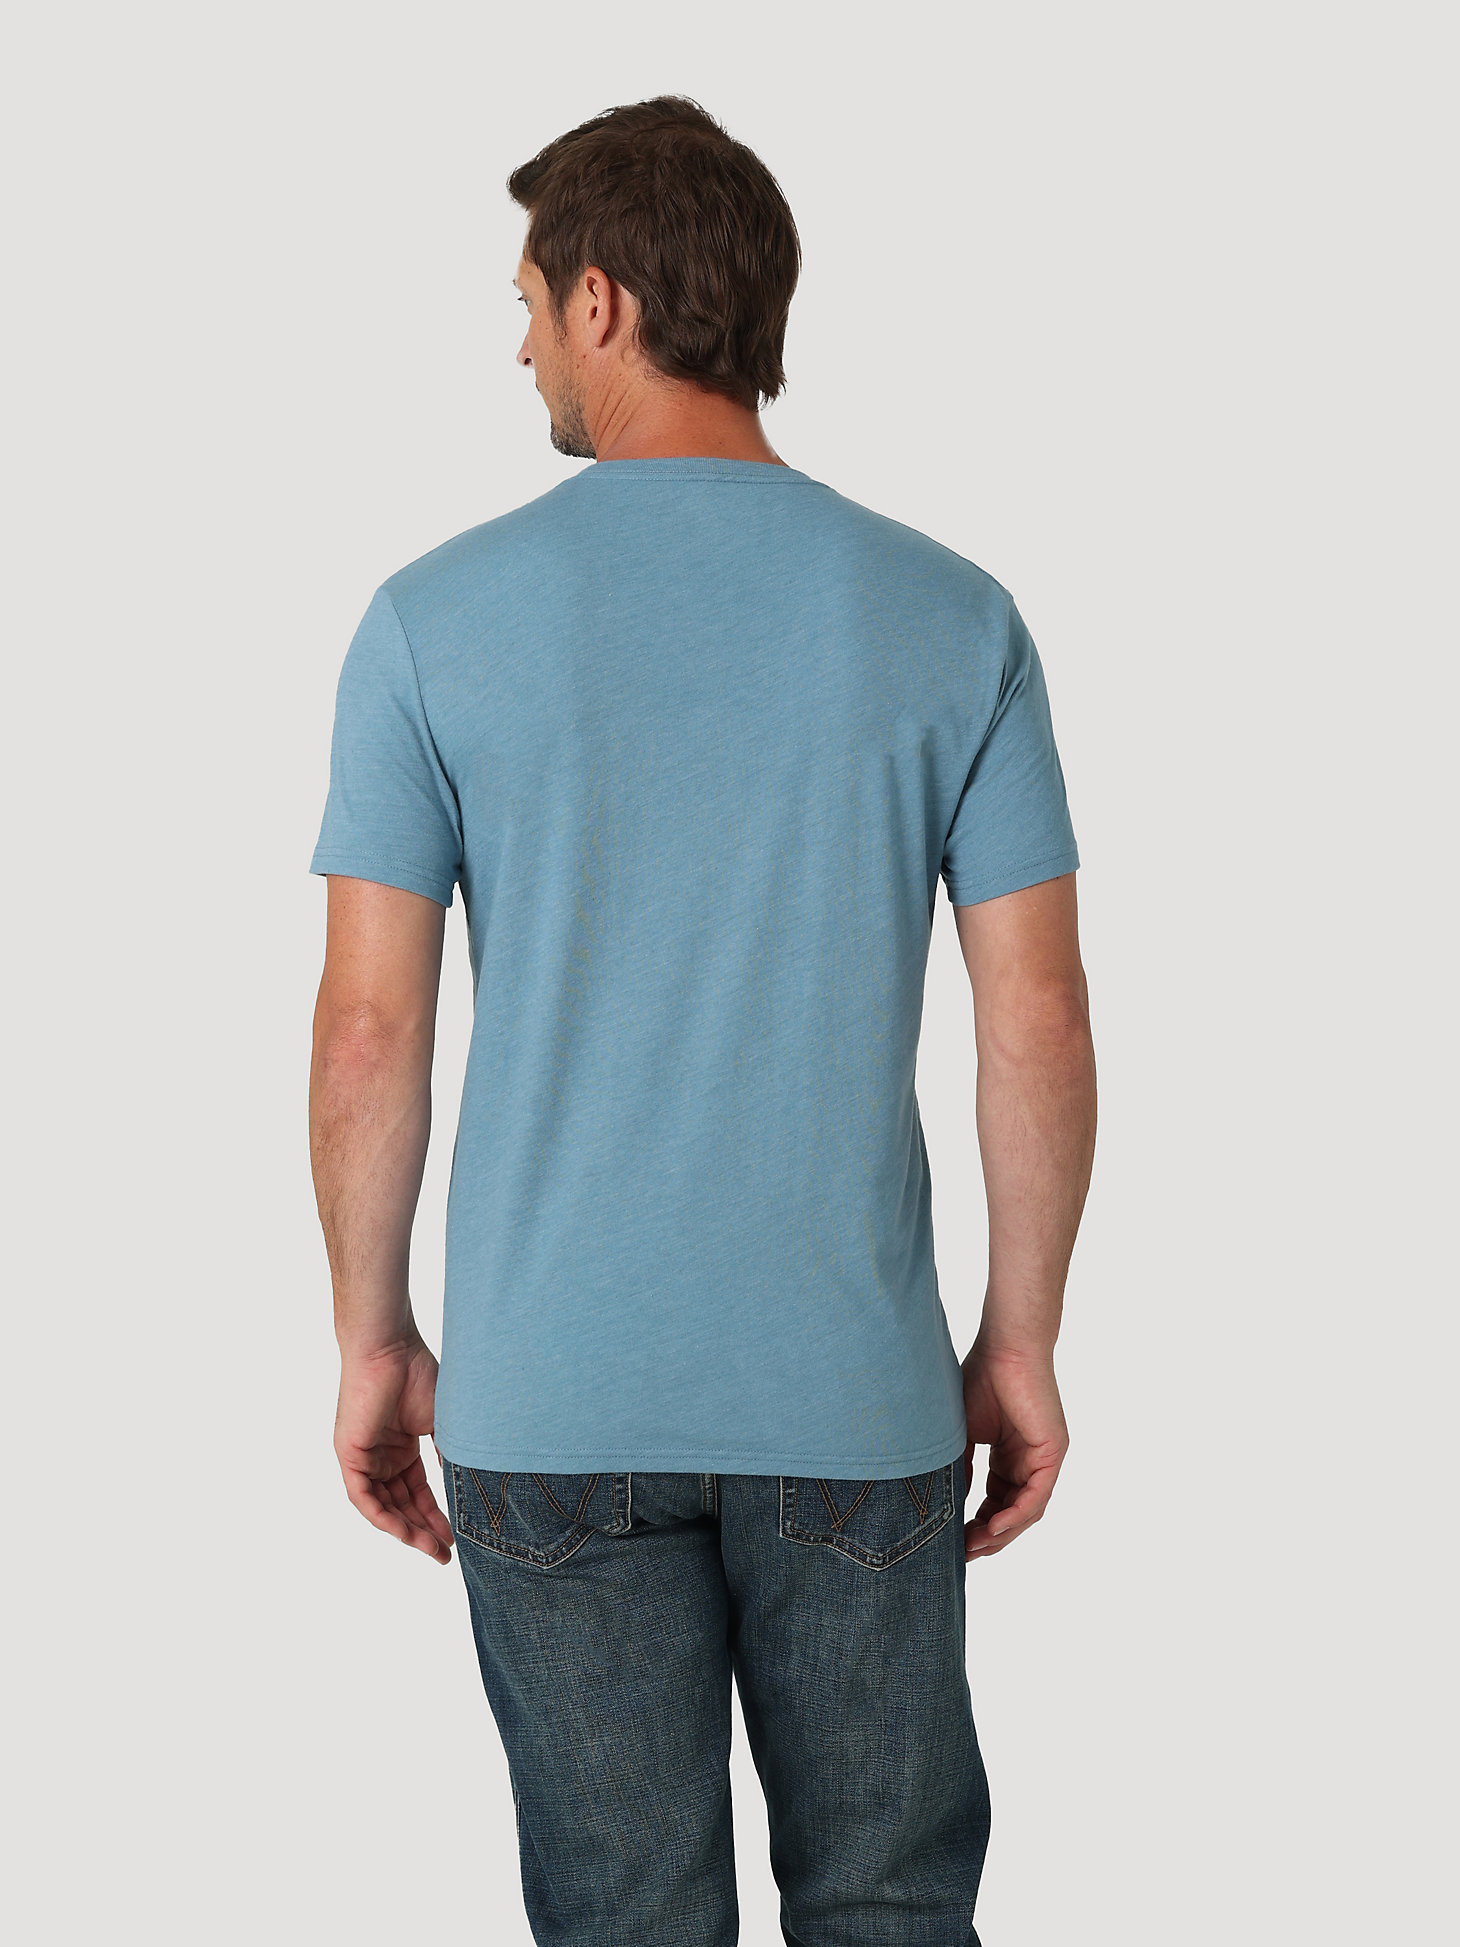 Men's Long Live Cowboys Graphic T-Shirt in Medium Blue alternative view 1